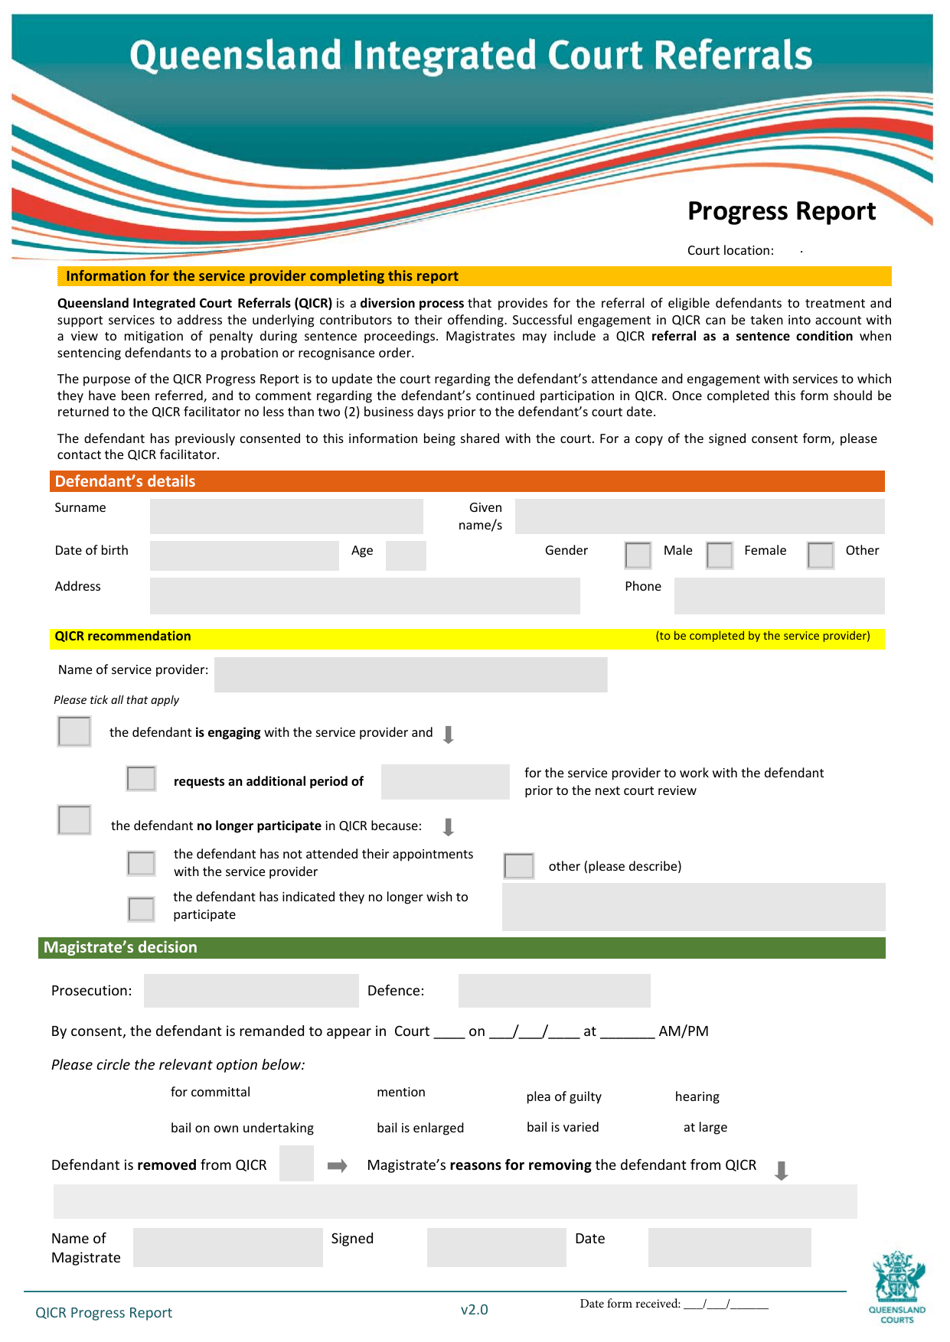 Qicr Progress Report - Queensland, Australia, Page 1